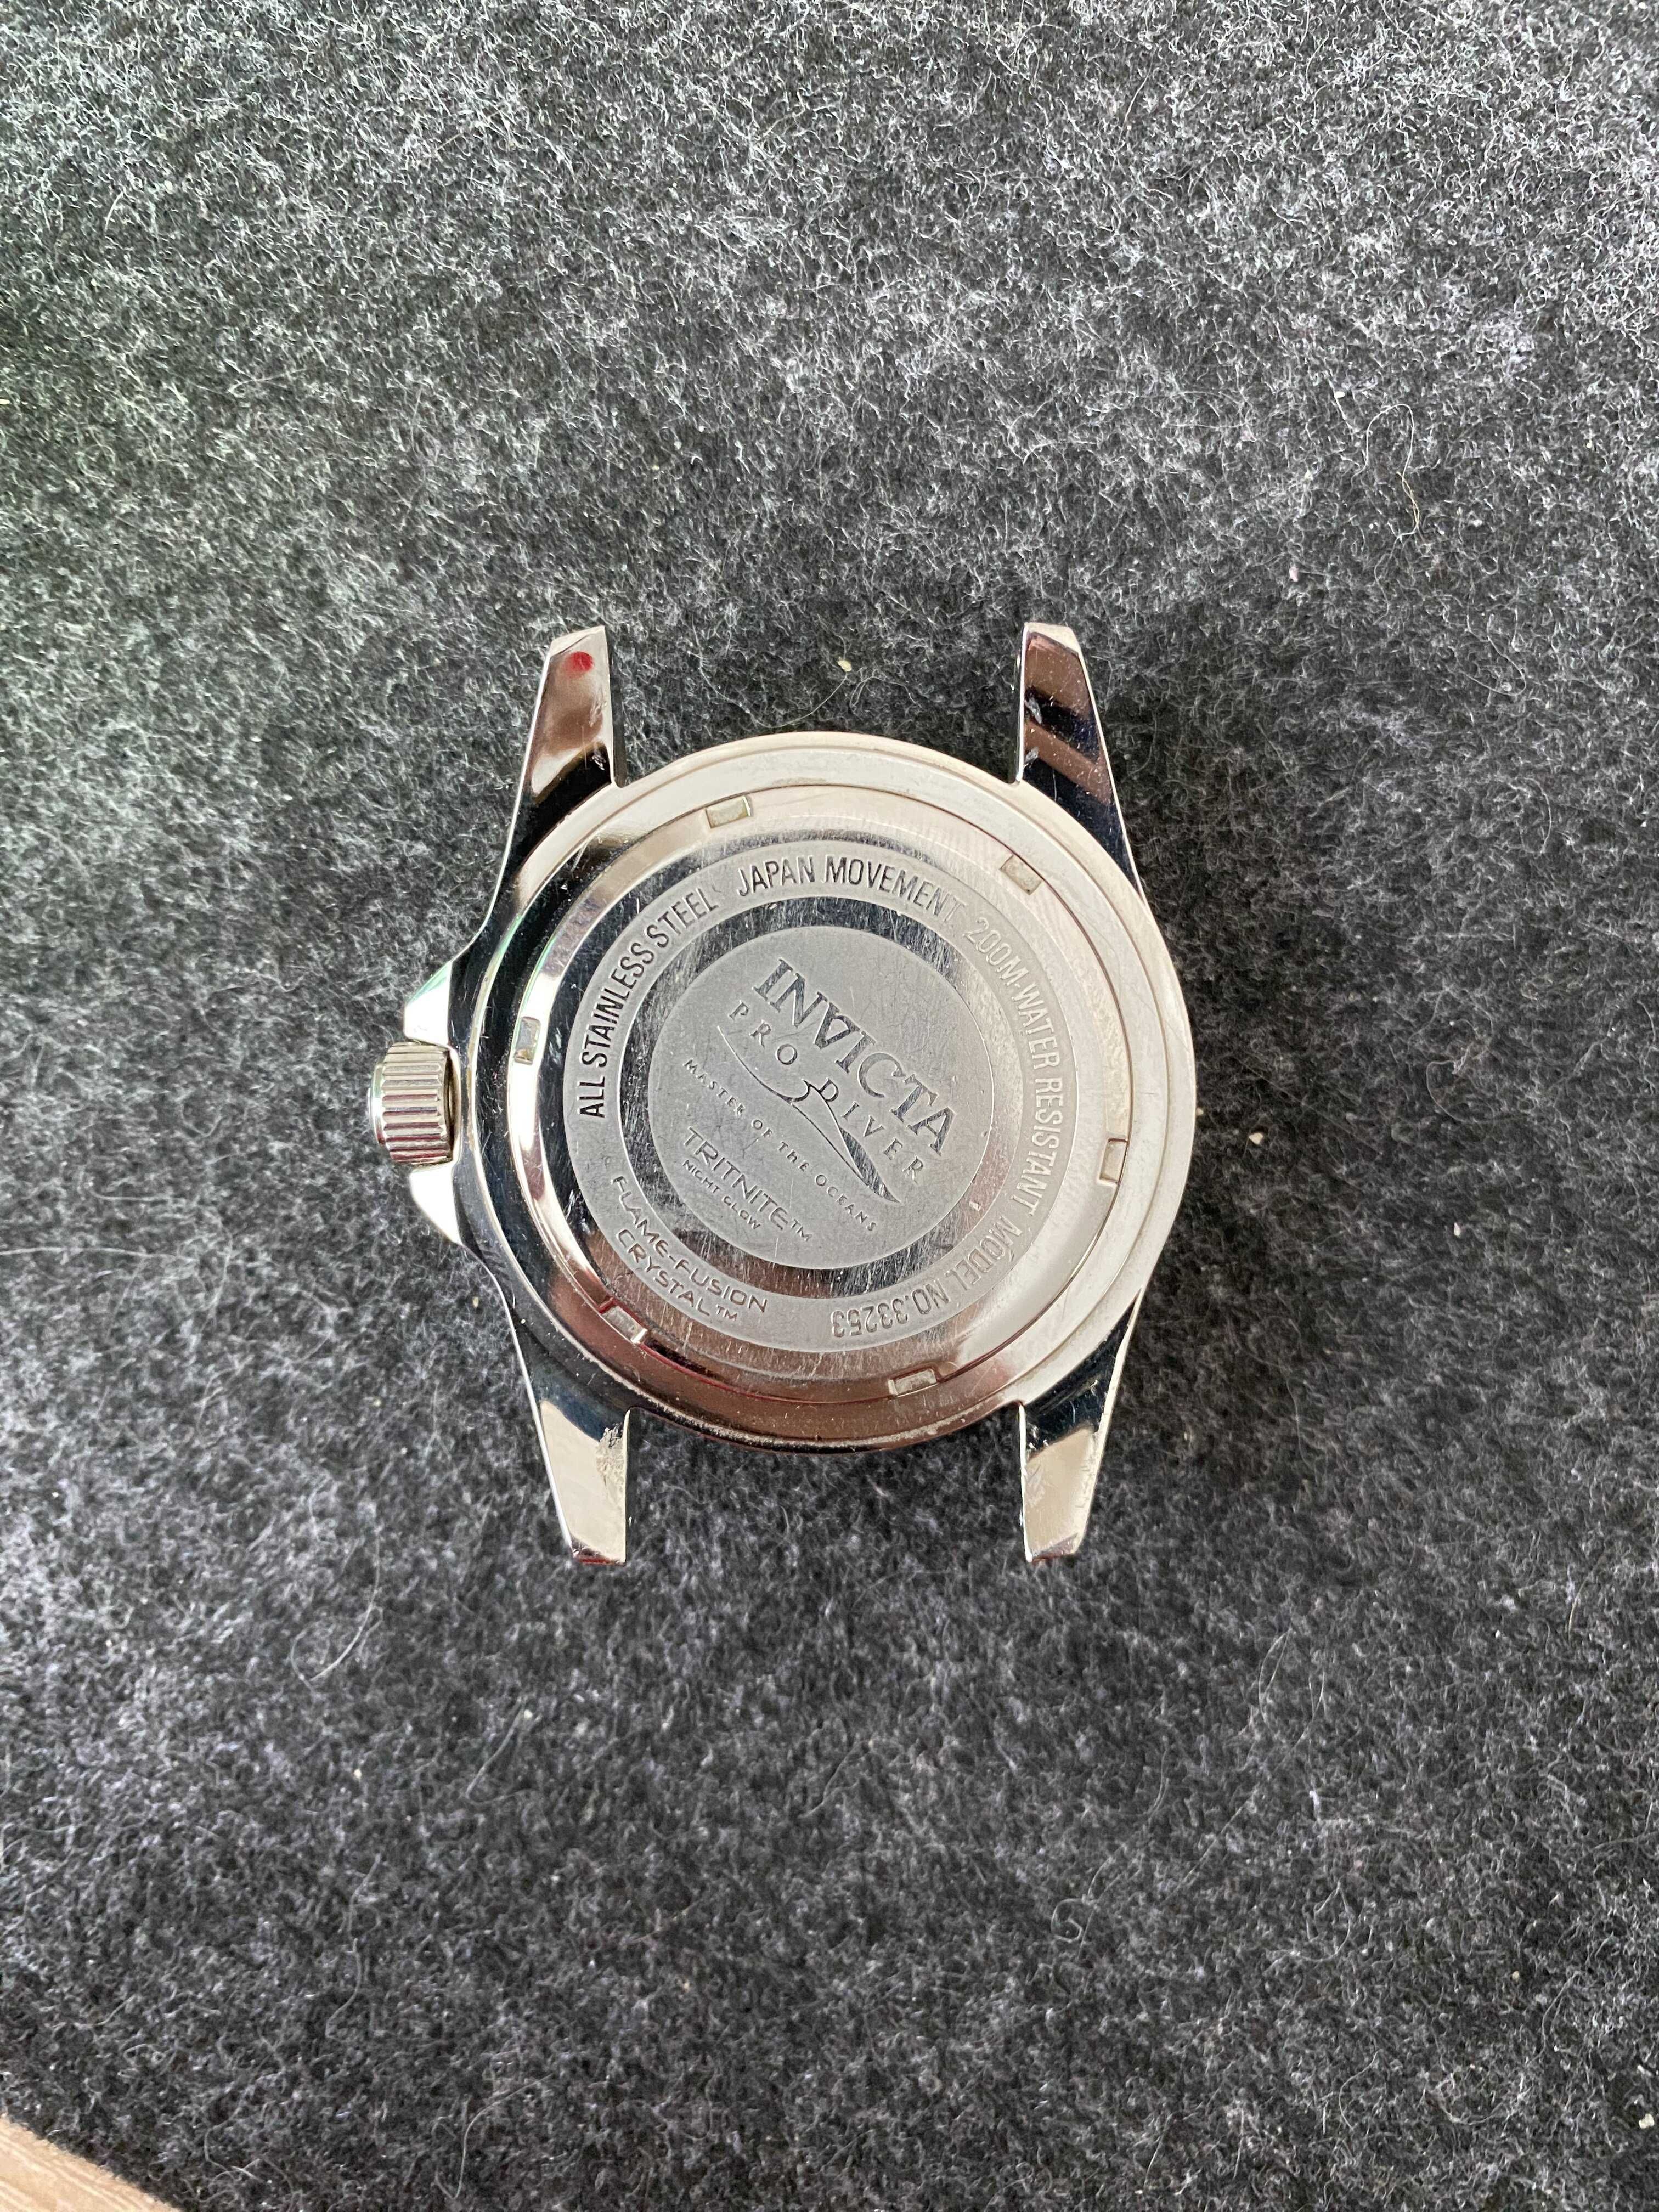 Чоловічий годинник Invicta | Часы Invicta Pro Diver 42 мм модель 33253